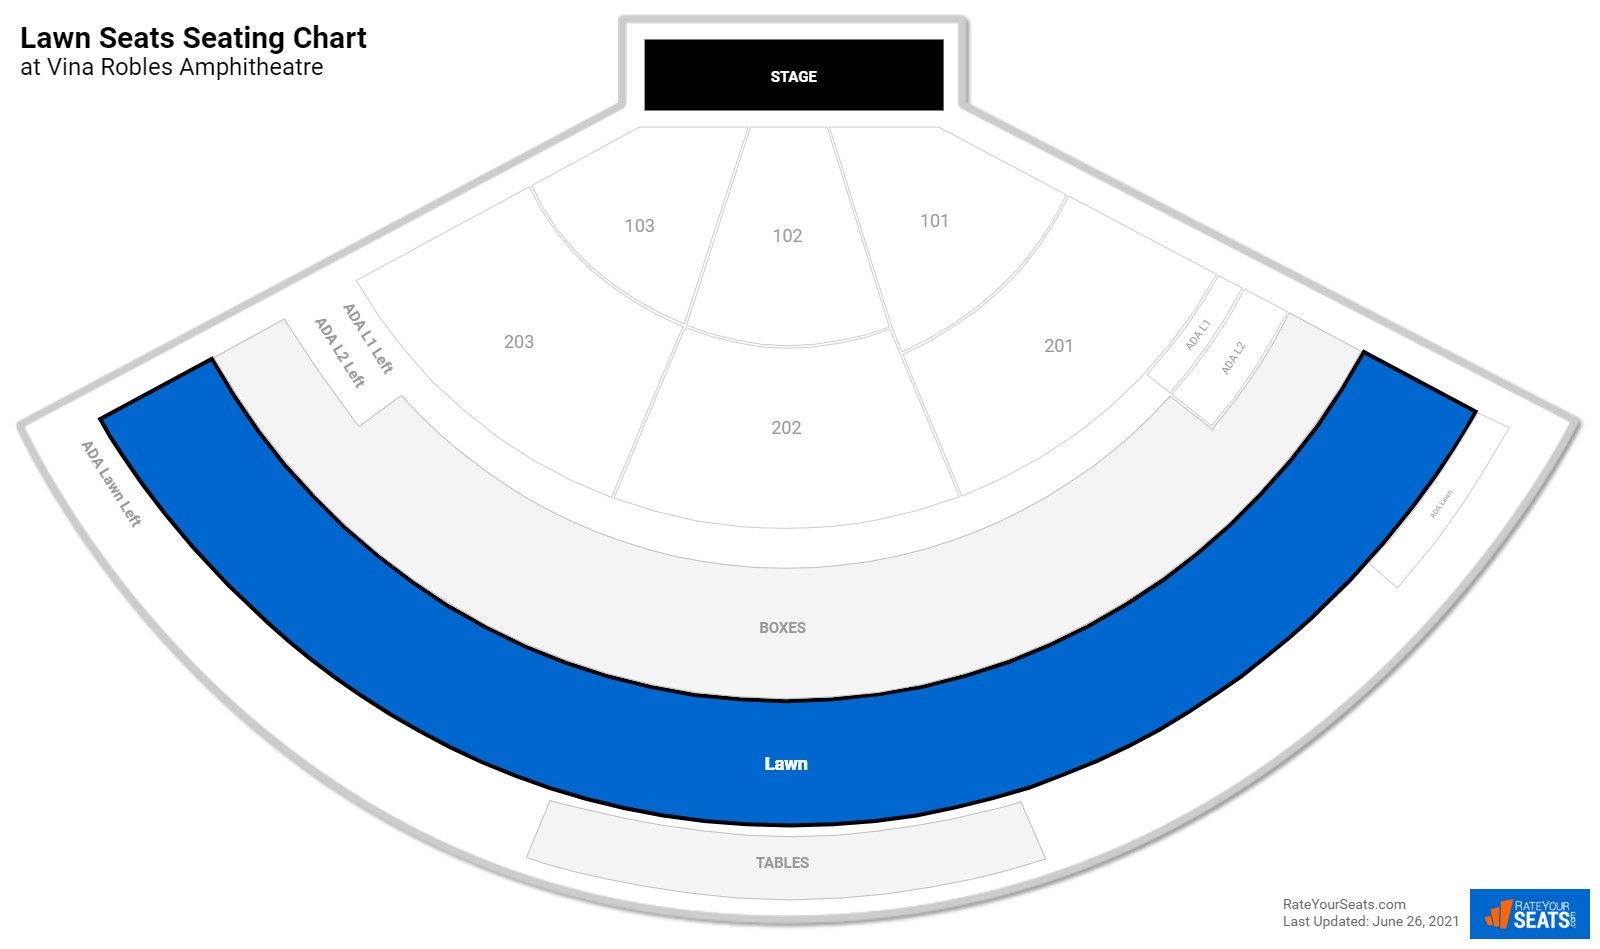 Concert Lawn Seats Seating Chart at Vina Robles Amphitheatre